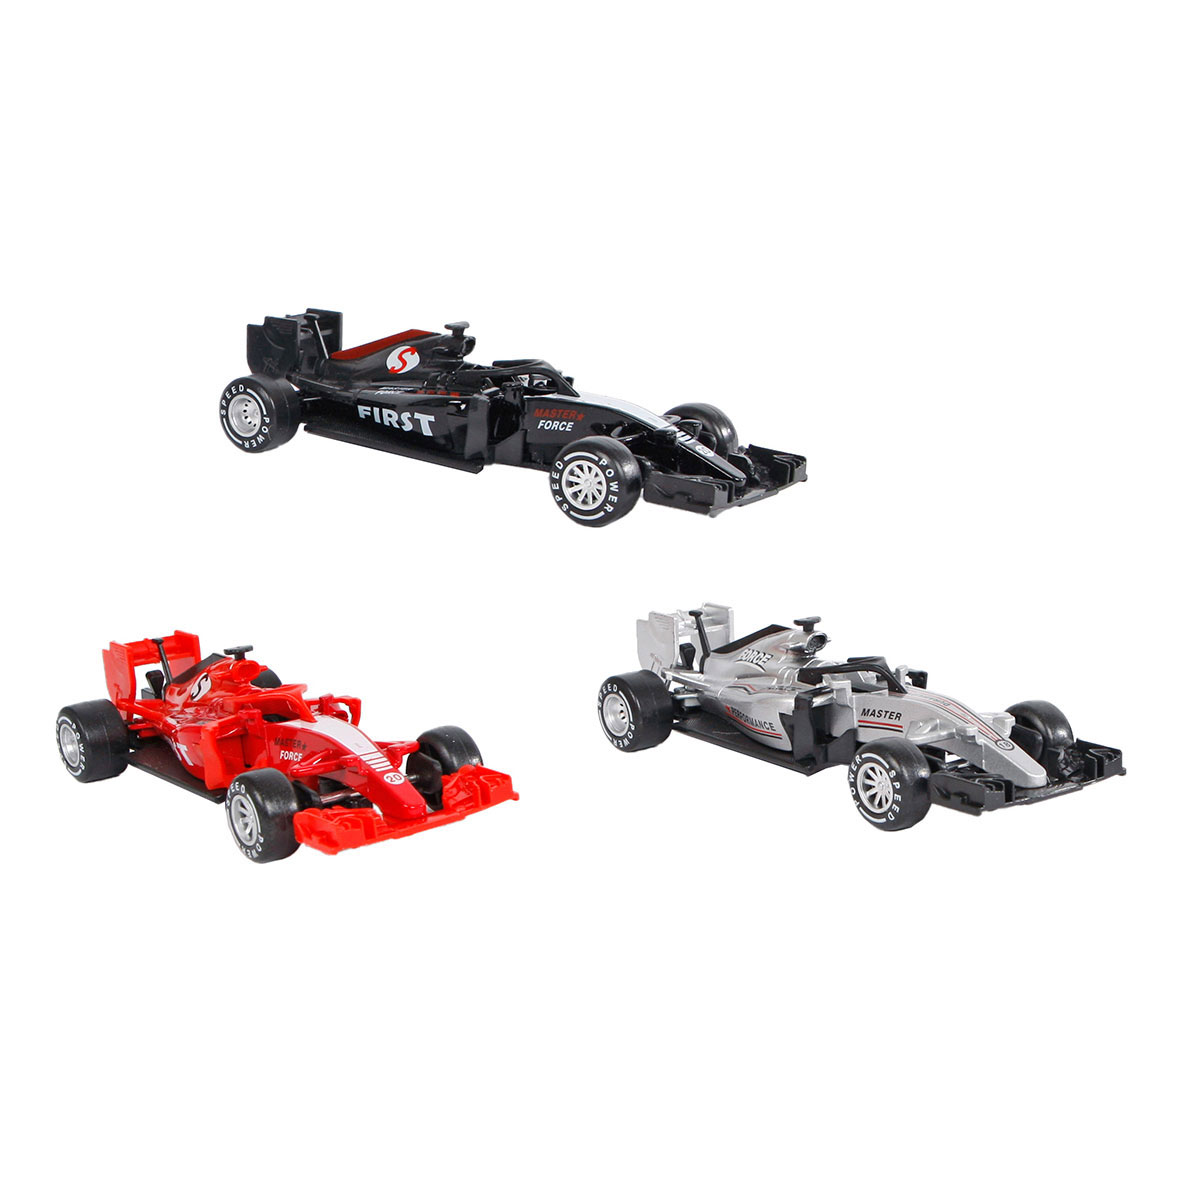 2-Play Die Cast Formule Race Auto kopen? | Lobbes Speelgoed